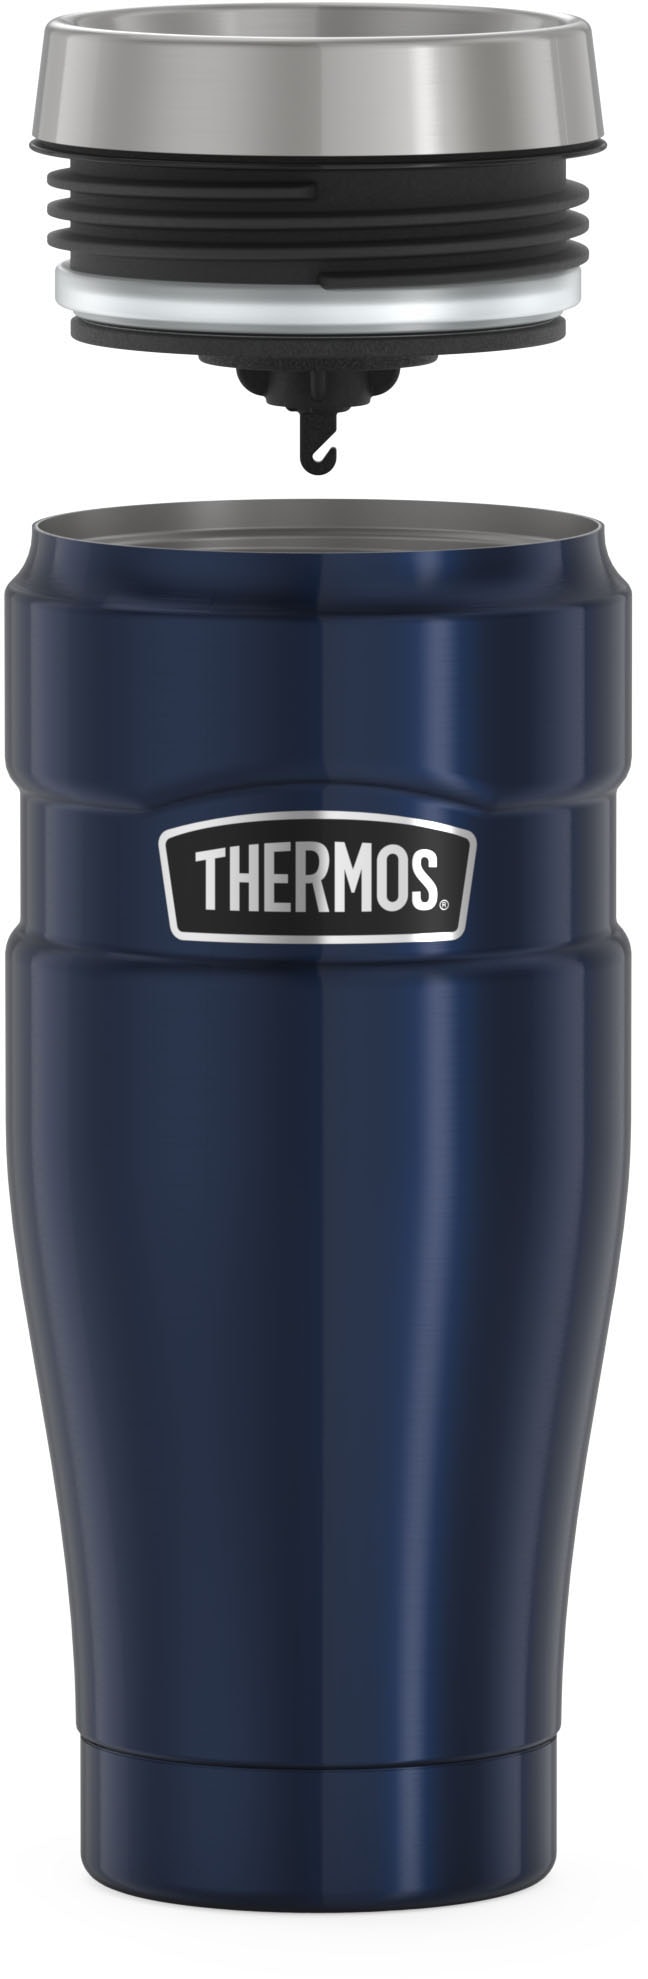 THERMOS Thermobecher »Stainless King«, (1 tlg.), DrinkLock – Verschlusssystem, 100% dicht